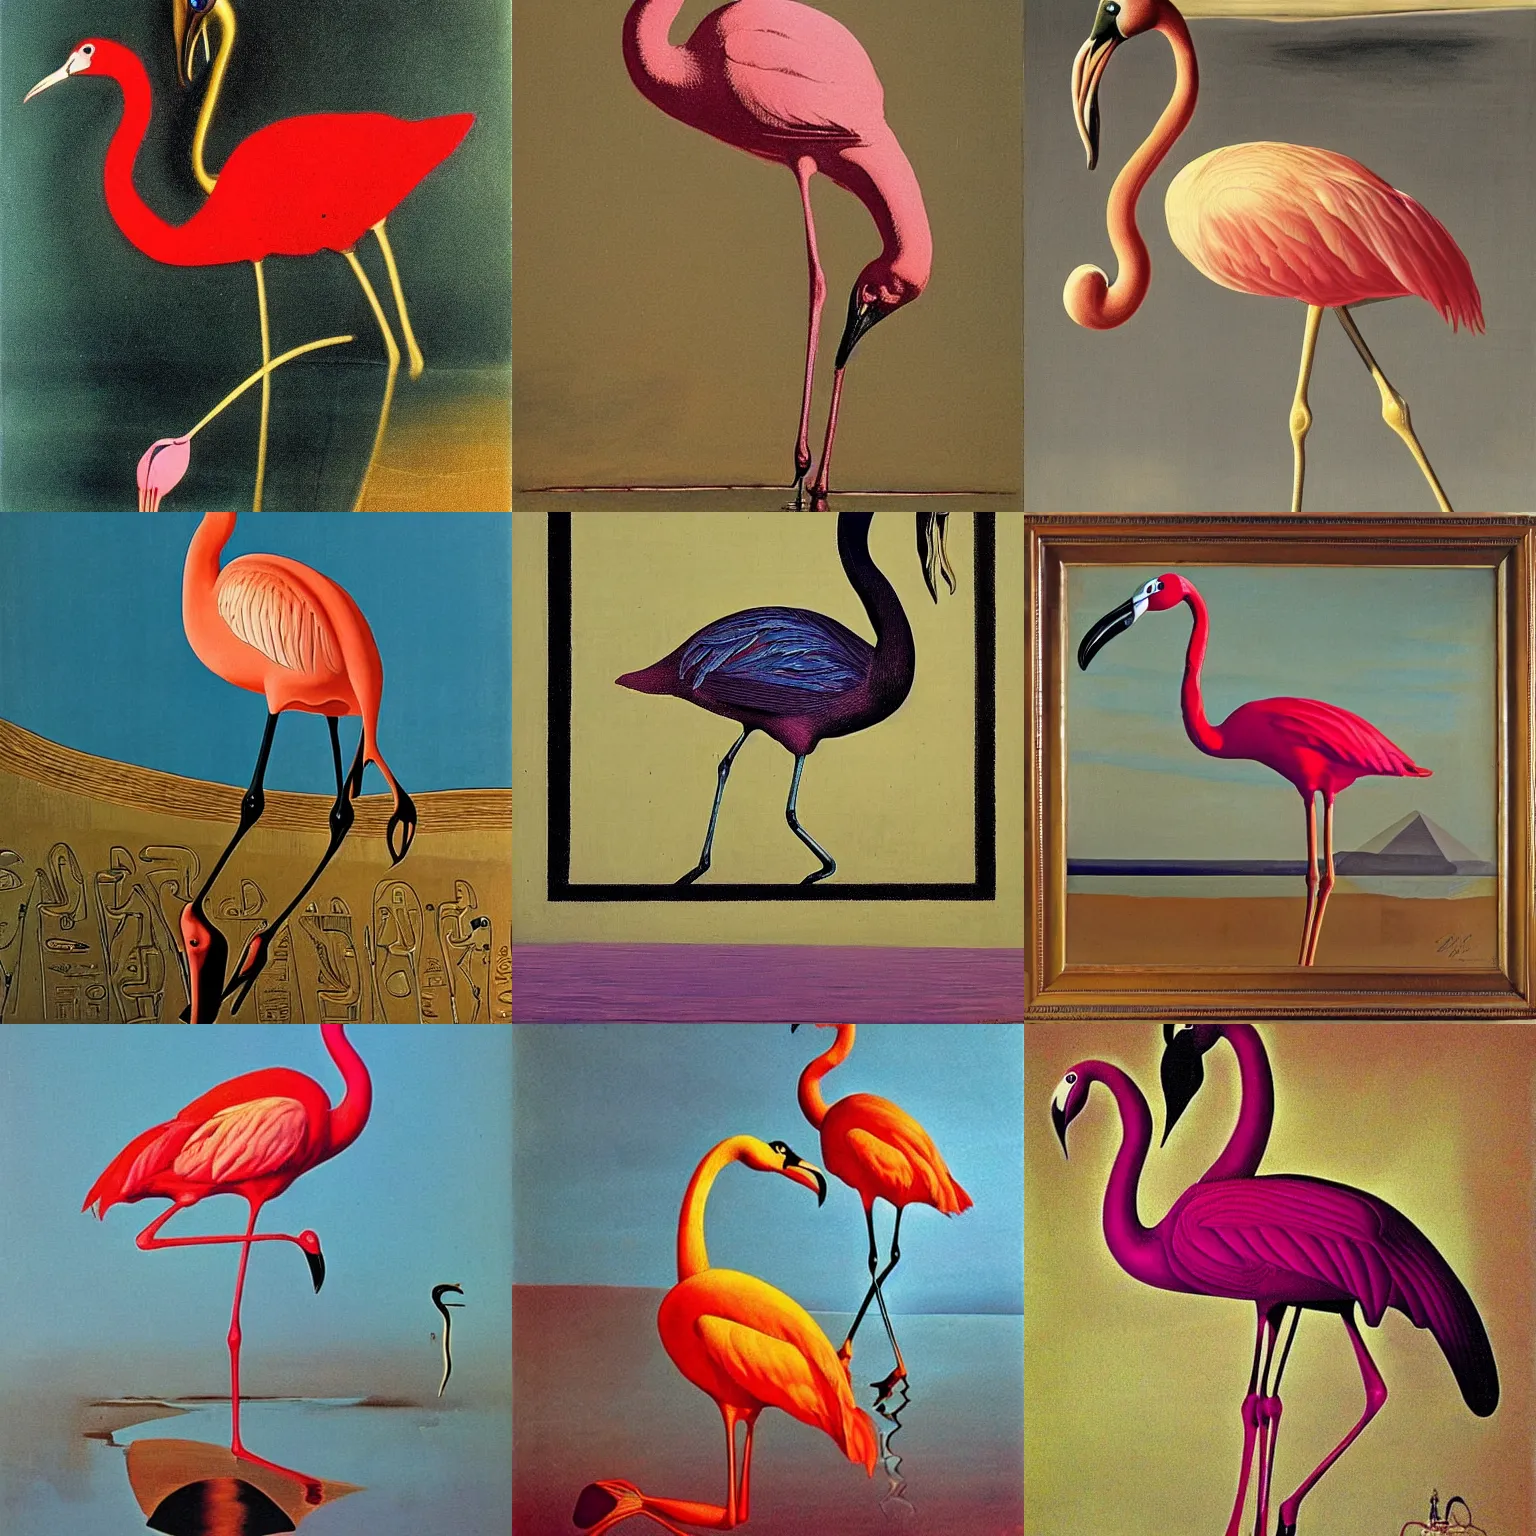 Prompt: an egyptian flamingo, award winning art by salvador dali